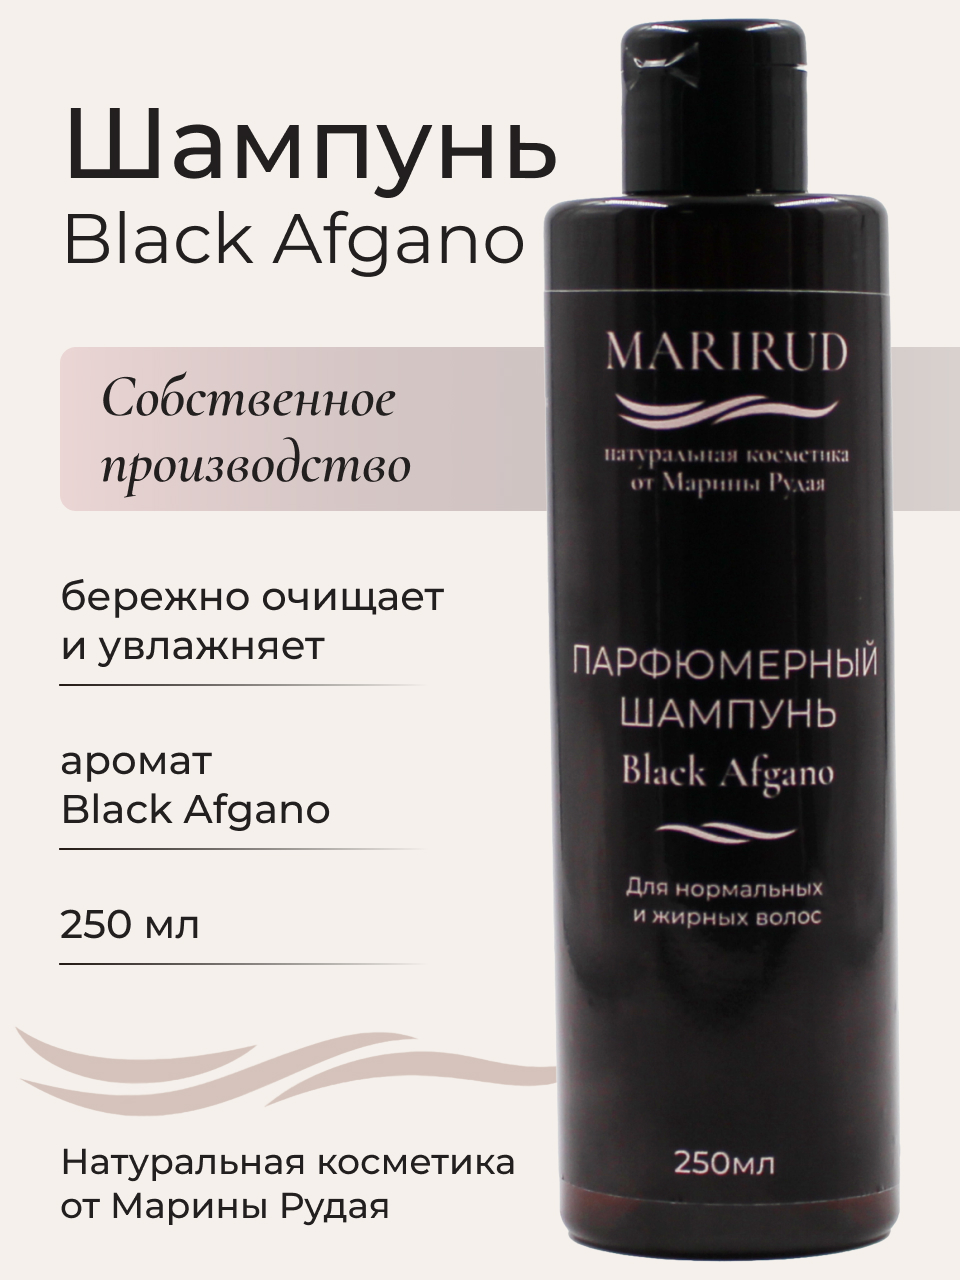 Набор парфюмерный- Шампуни Black Afgano и Tobacco Vanille tobacco